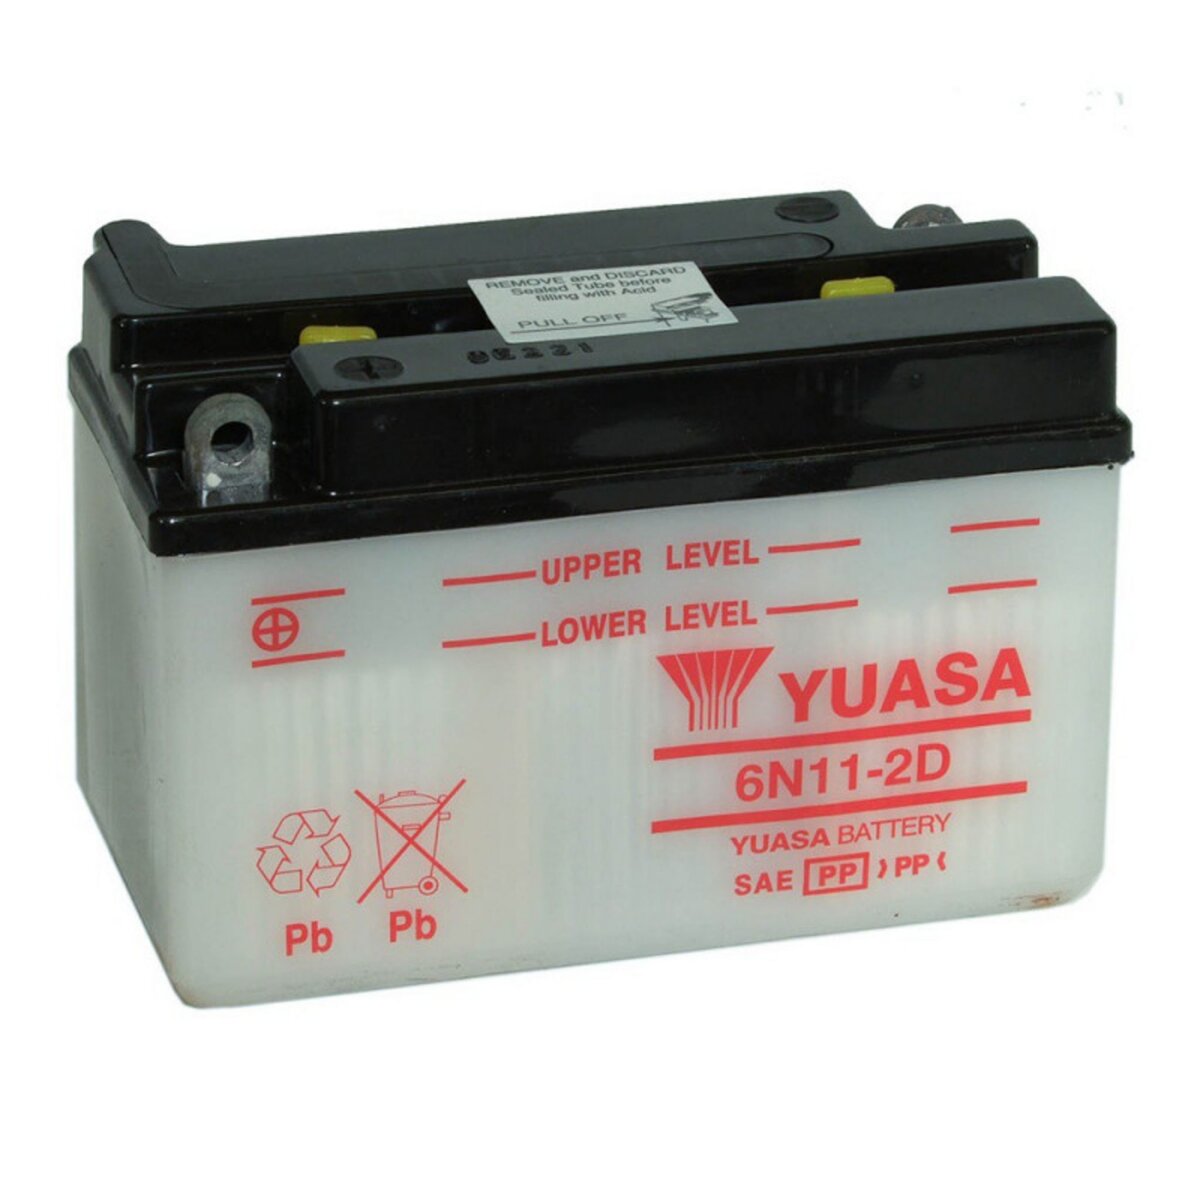 YUASA Batterie moto YUASA 6N11-2D 6V 11.6AH